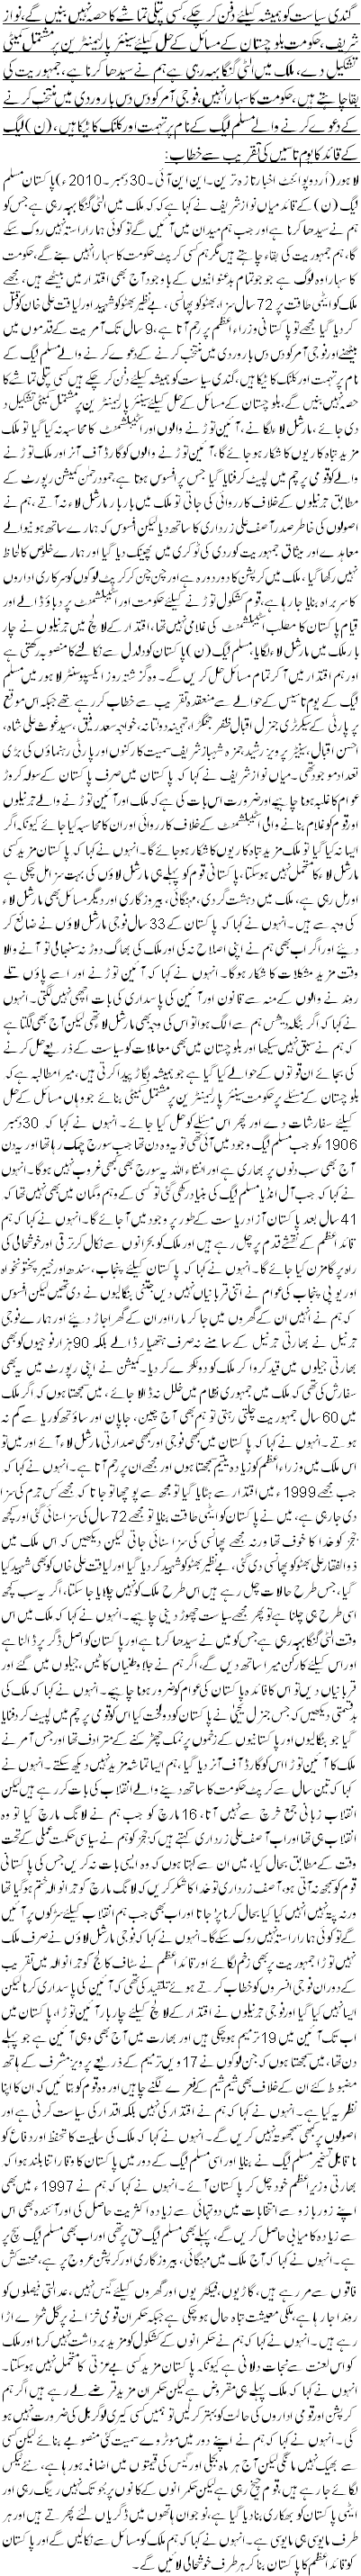 Burnt Dirty Politics Forever Nawaz Sharif - Urdu Politics News